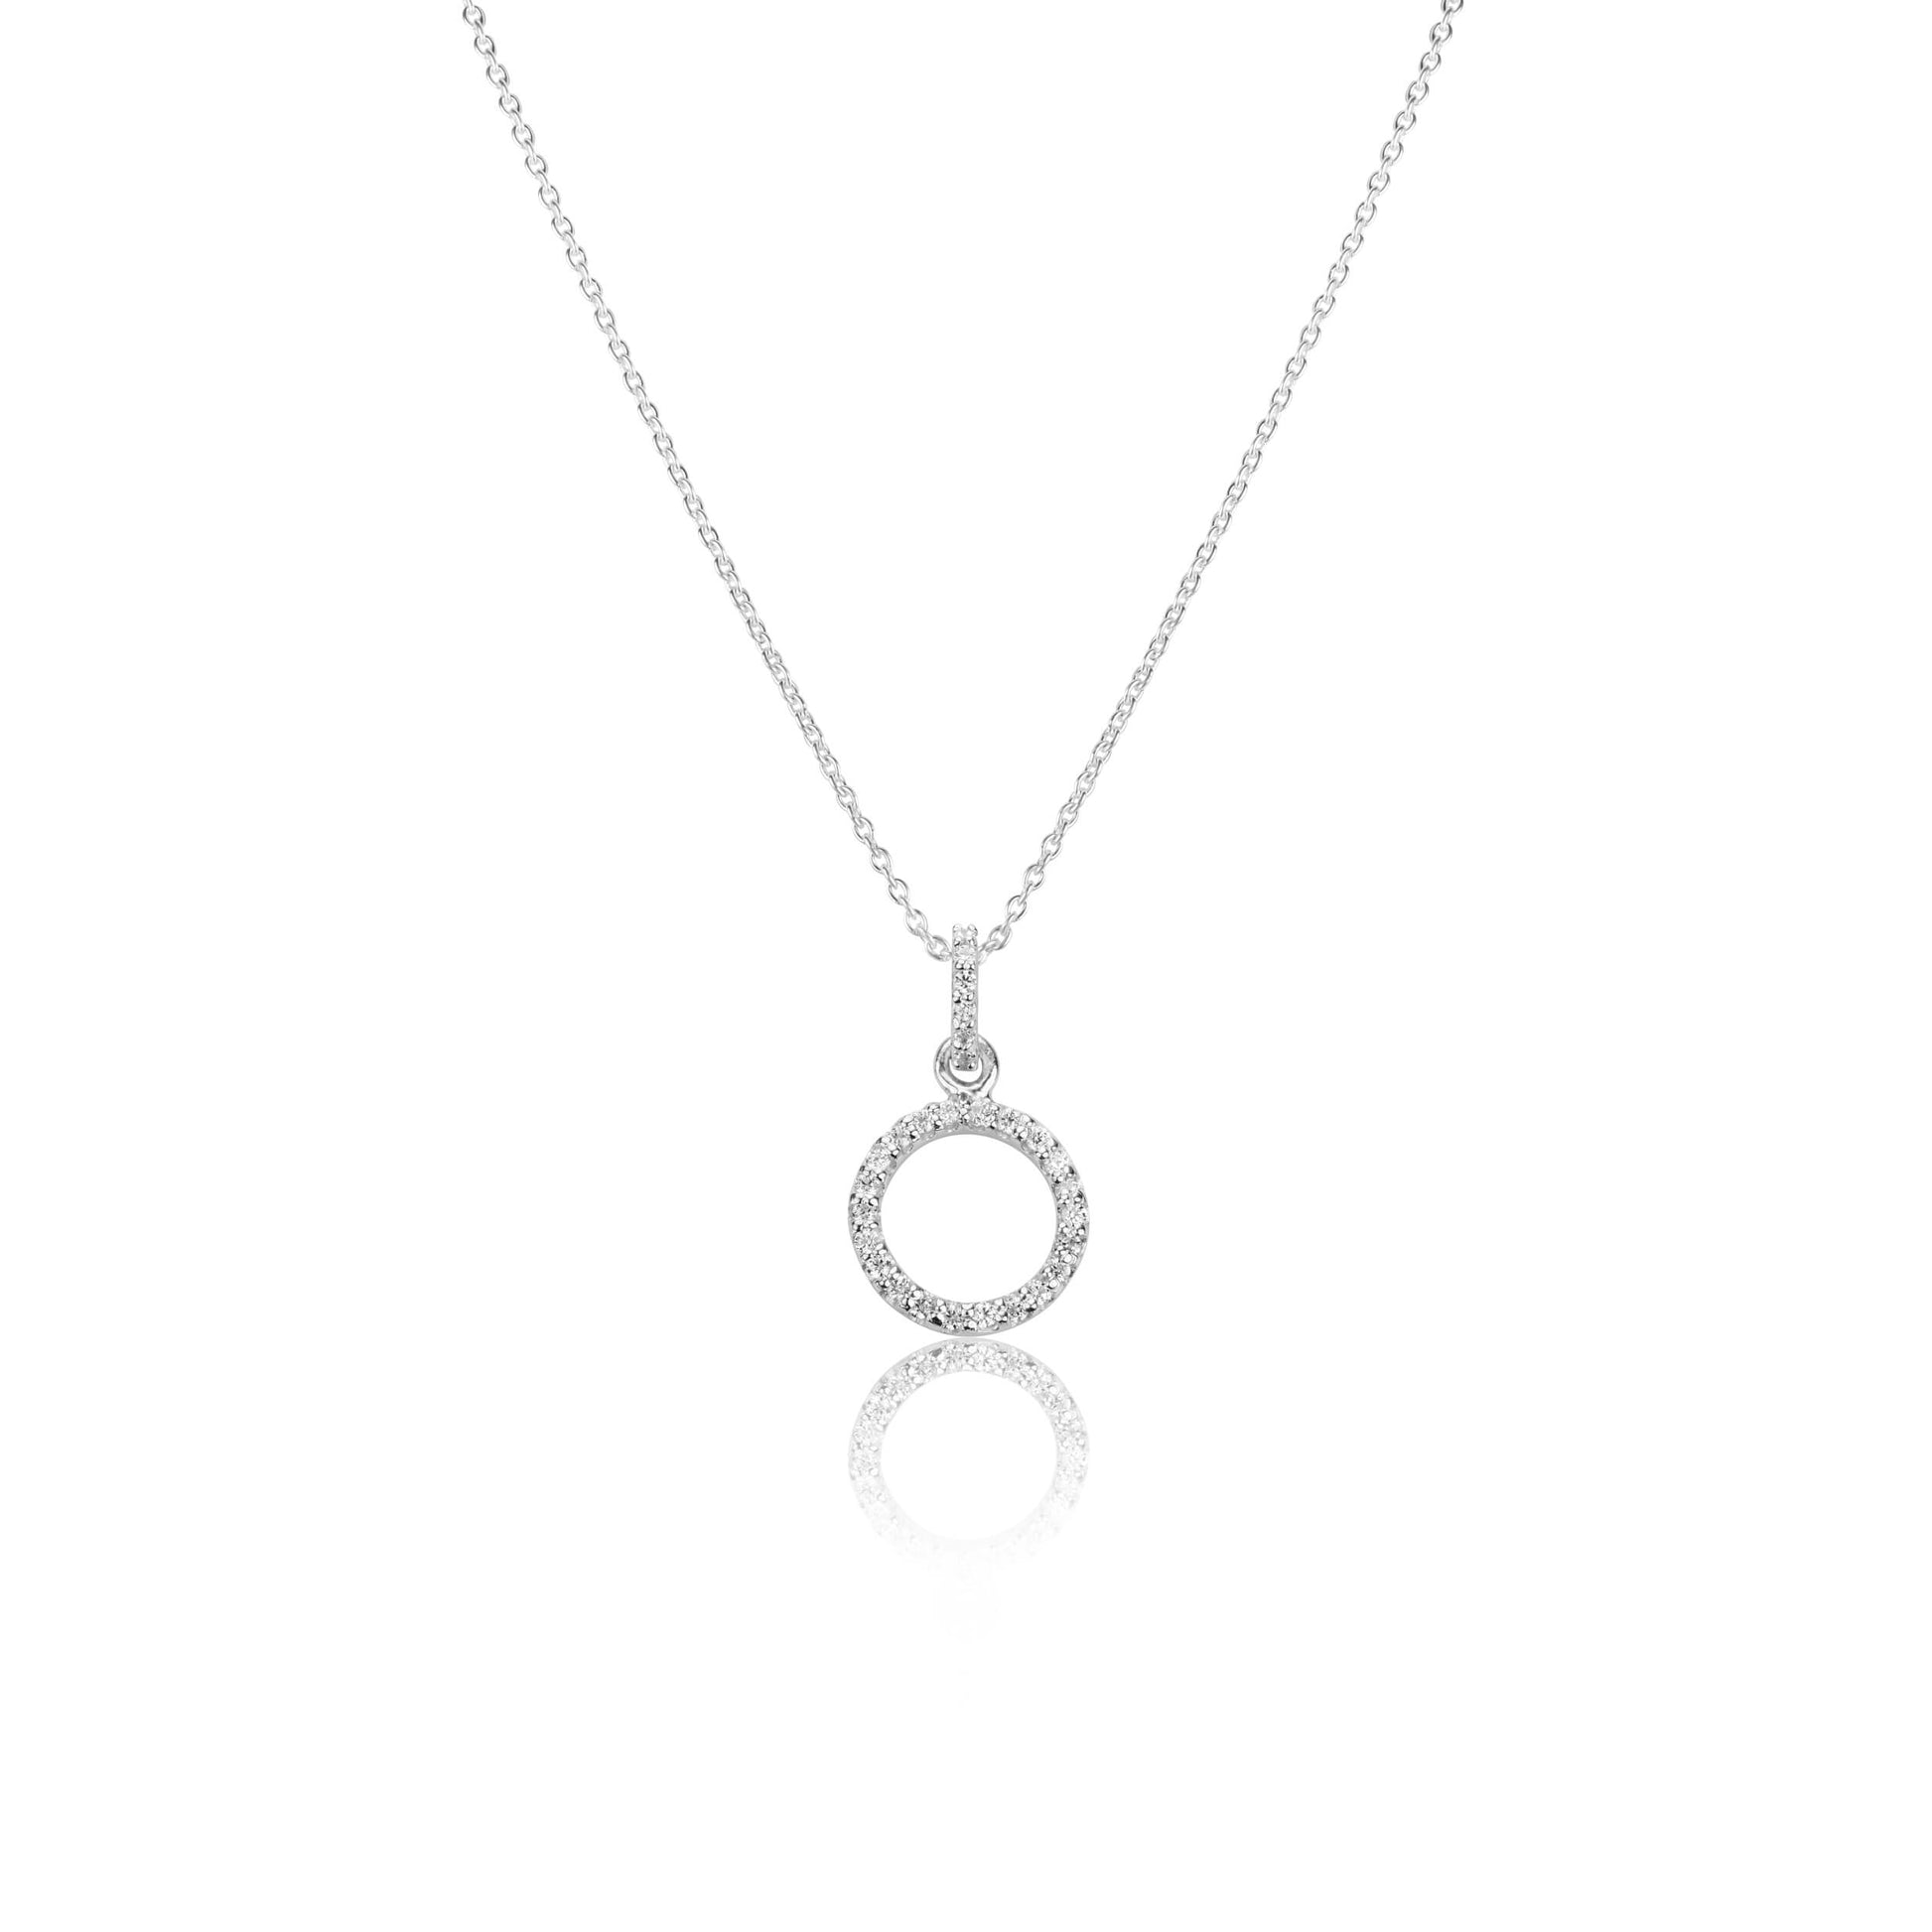 Silver Necklace Elegant Circle Necklace